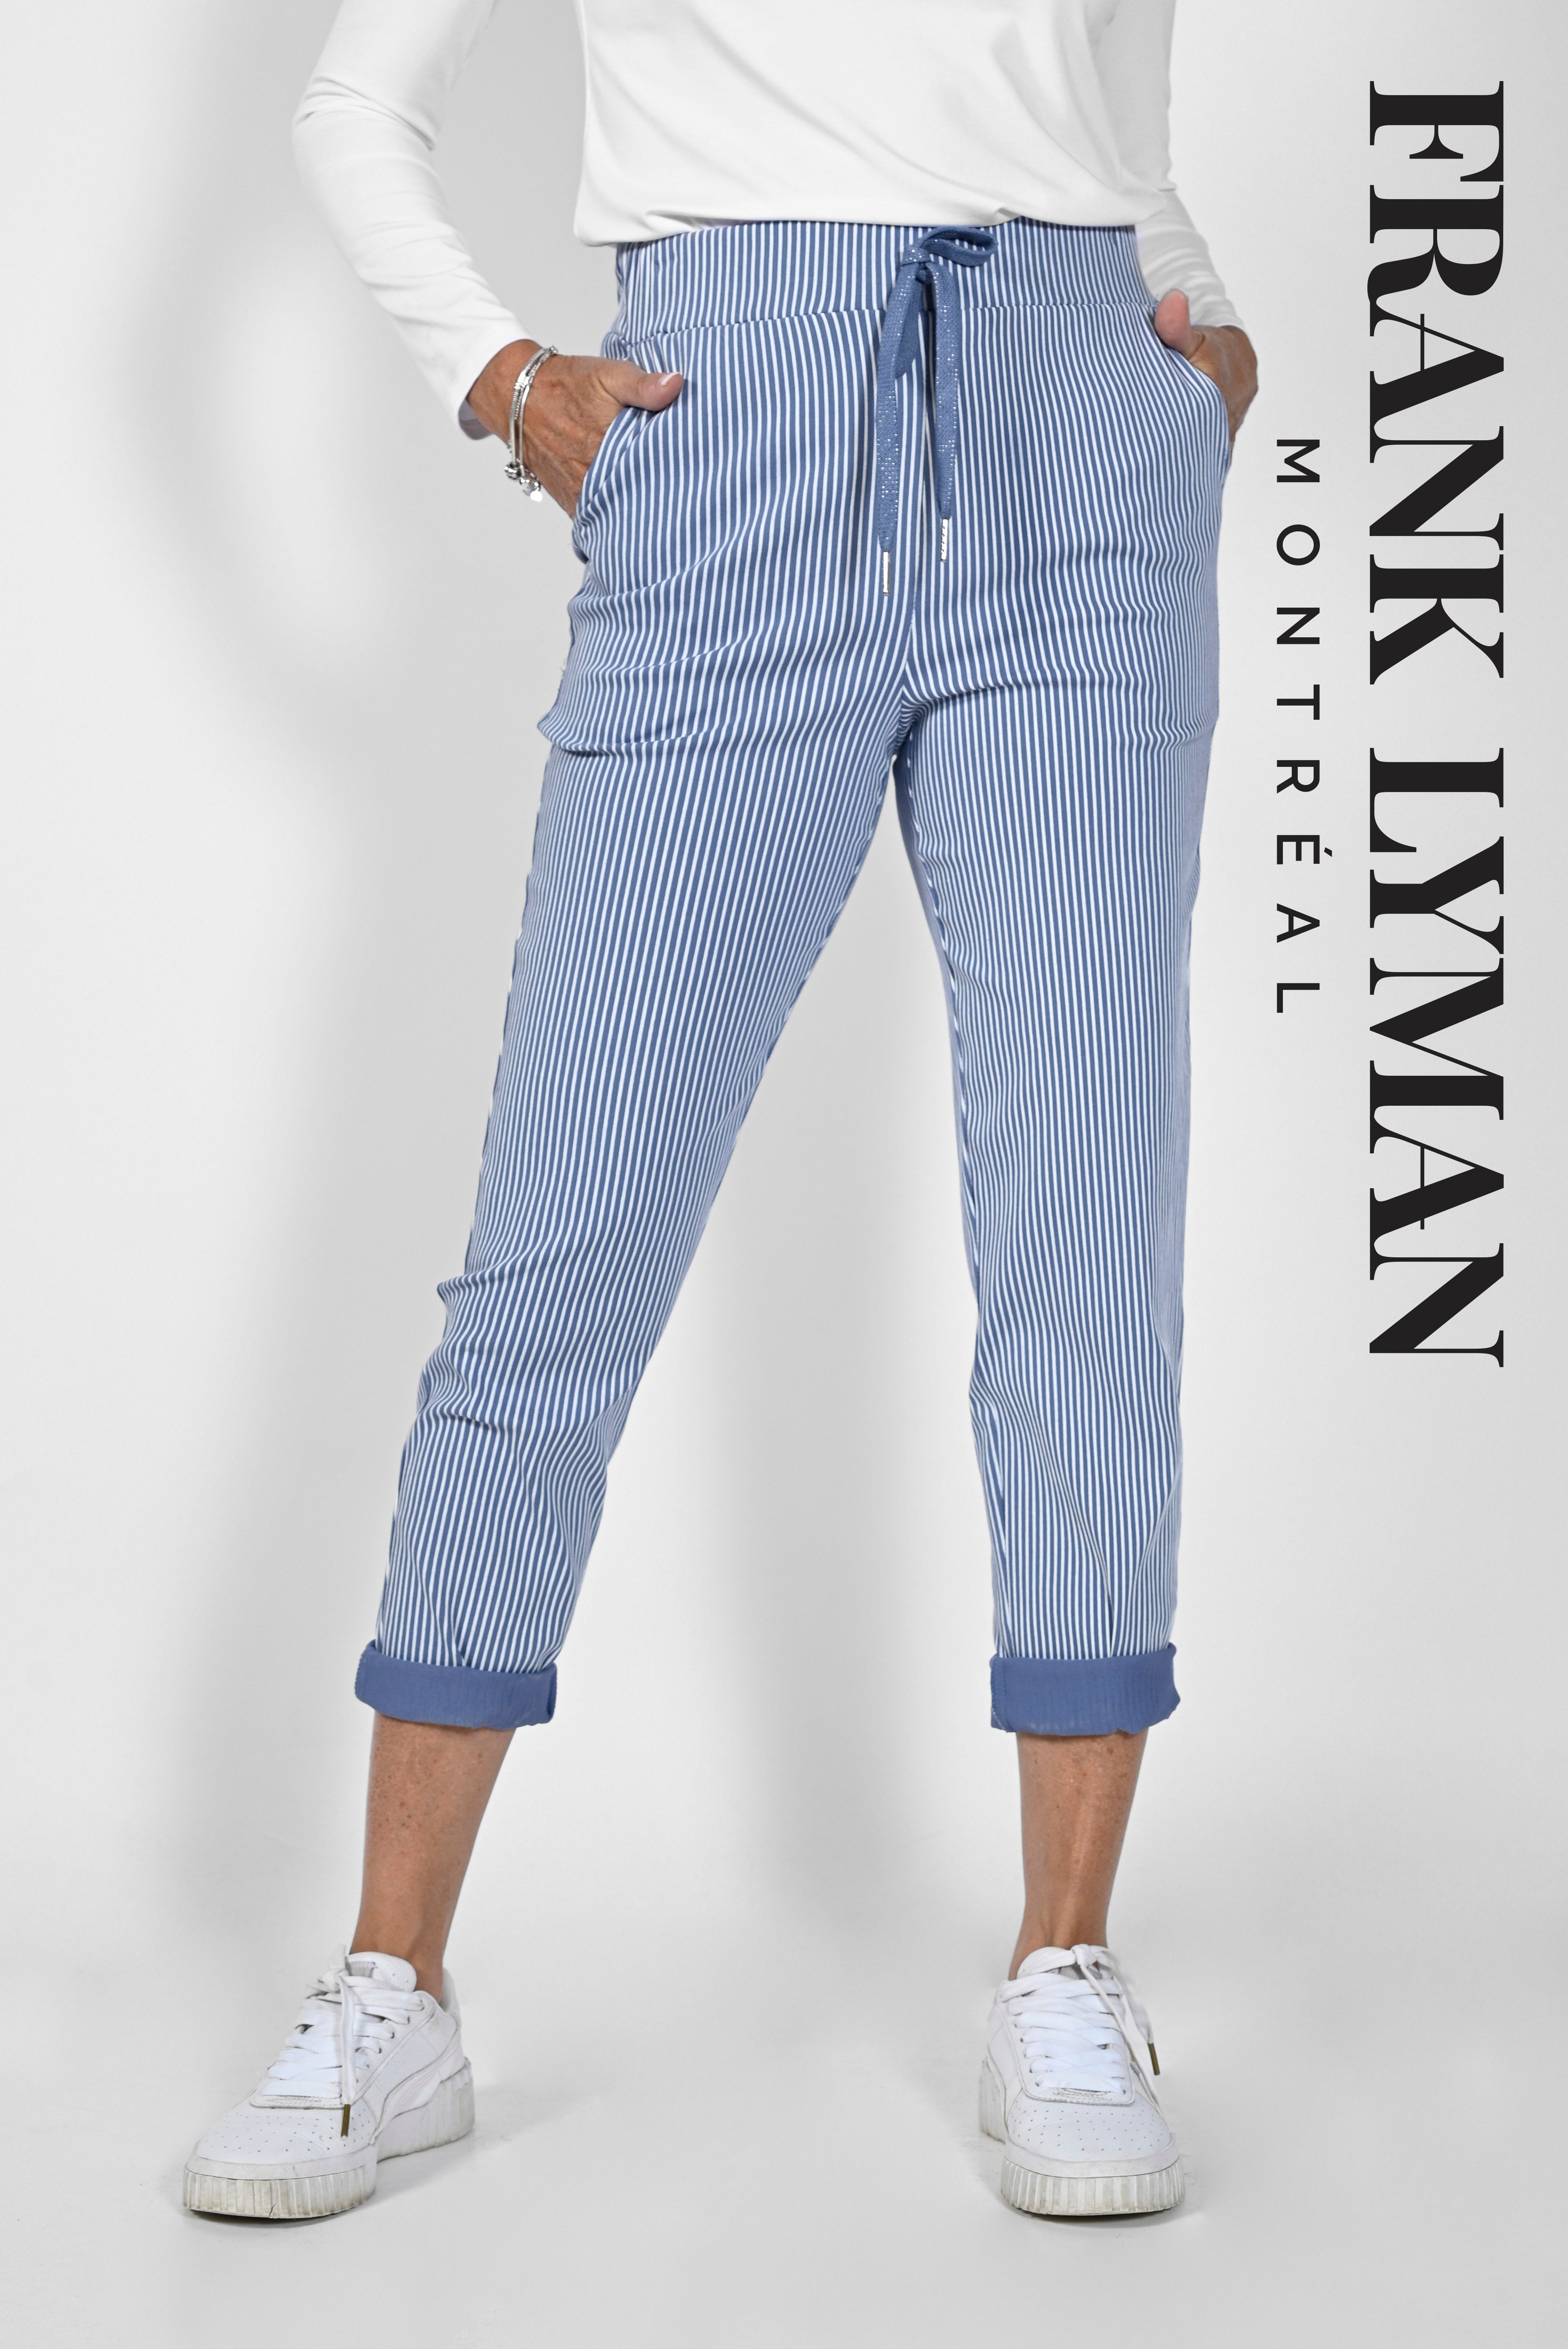 Frank Lyman Montreal Pants-Frank Lyman Montreal Seersucker Pants-Buy Frank Lyman Montreal Clothing Online-Seersucker Pants Online Canada